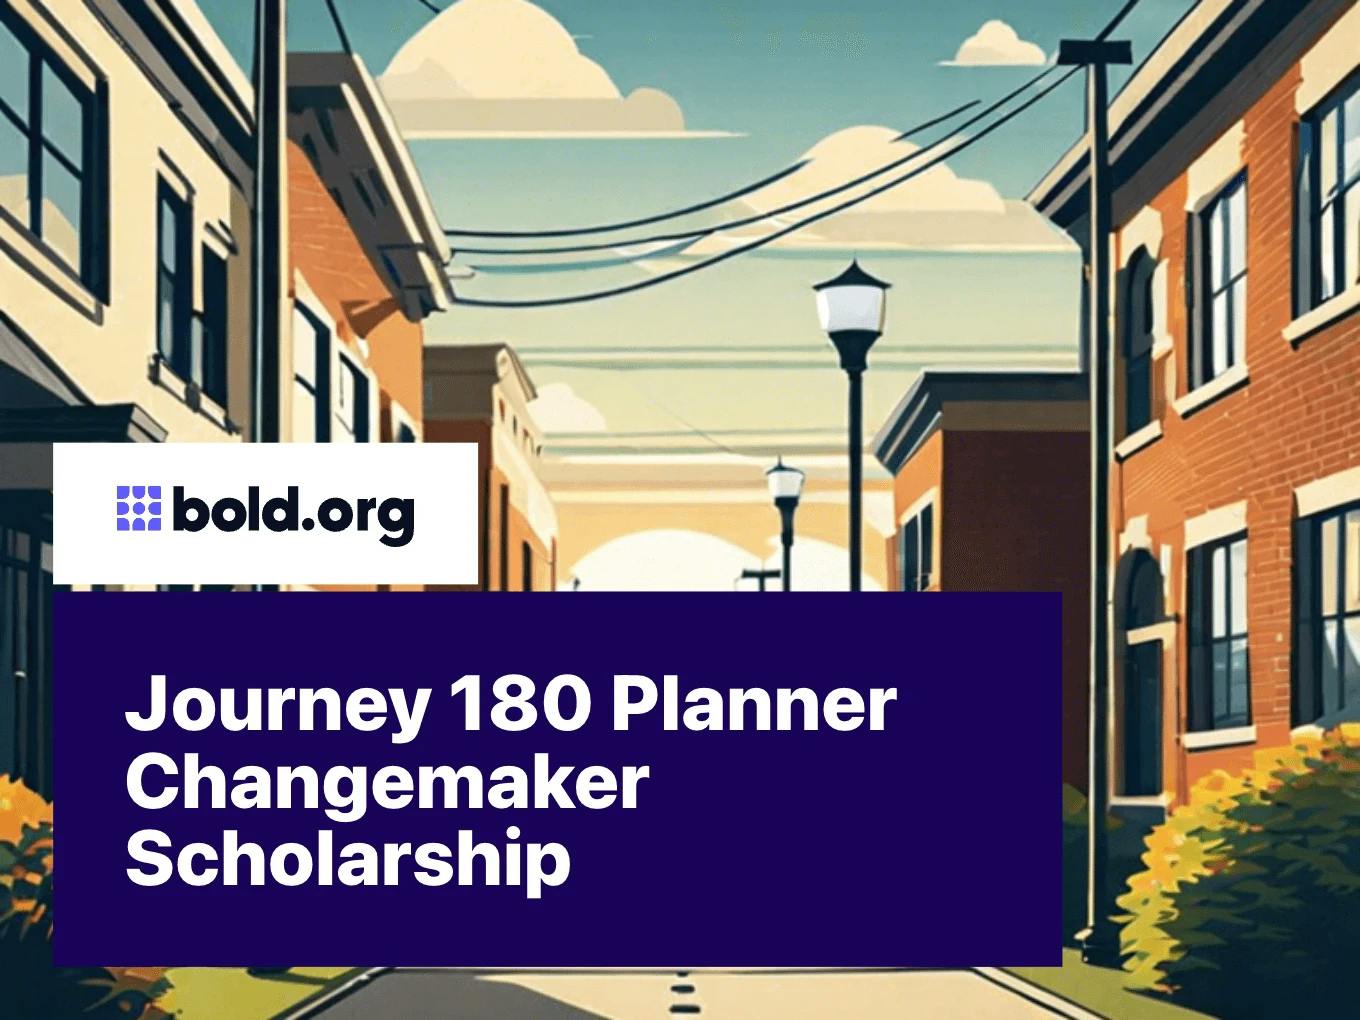 Journey 180 Planner Changemaker Scholarship